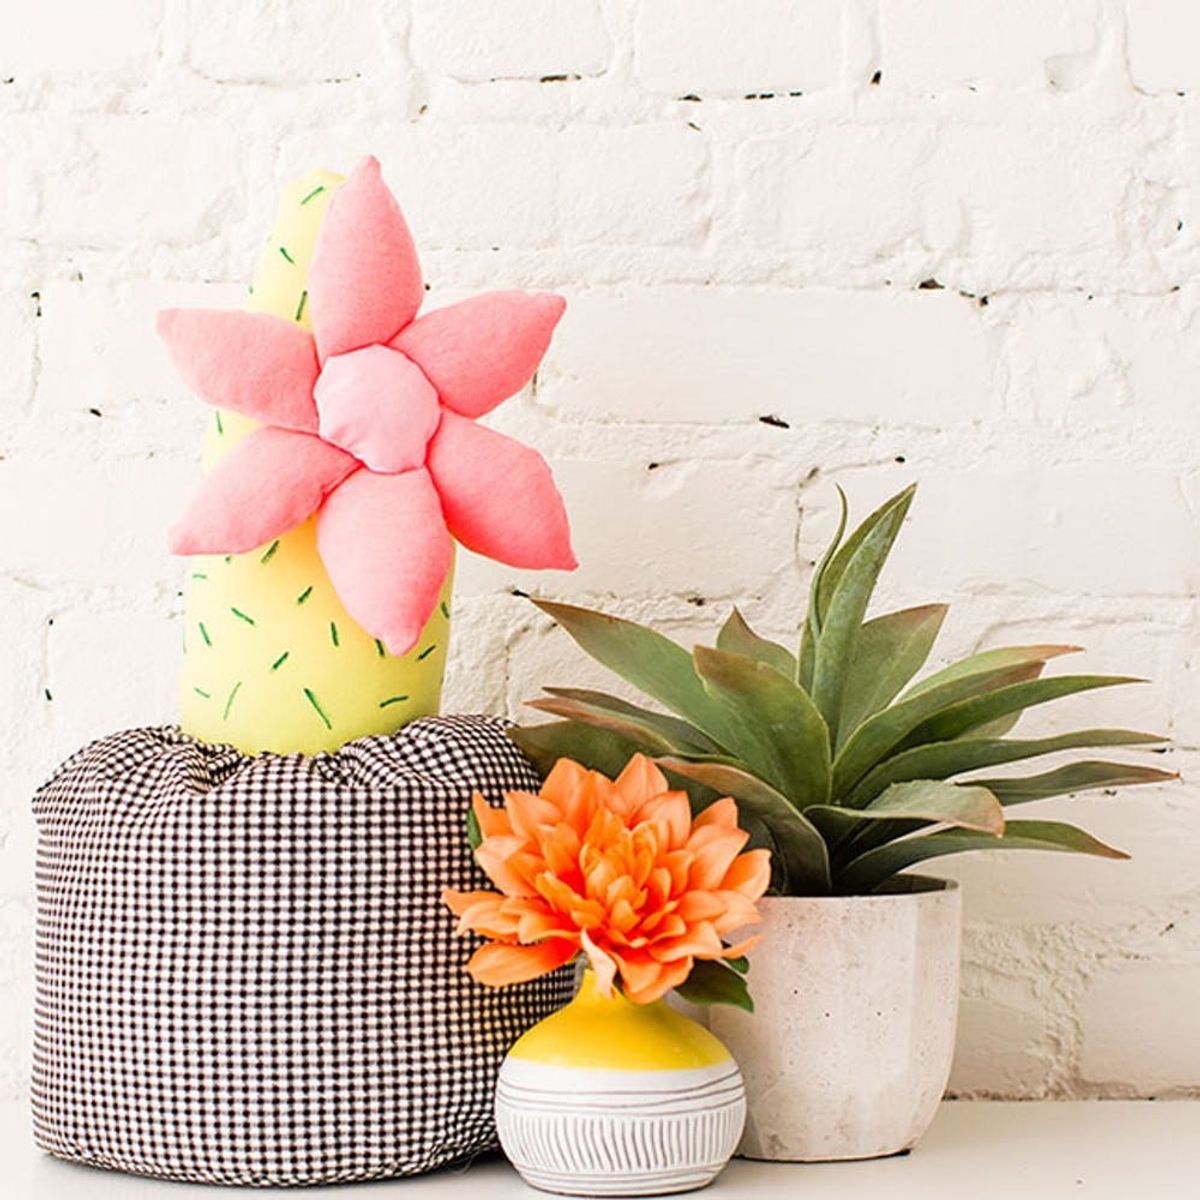 Celebrate Cinco de Mayo With DIY Stuffed Cactus Pillows